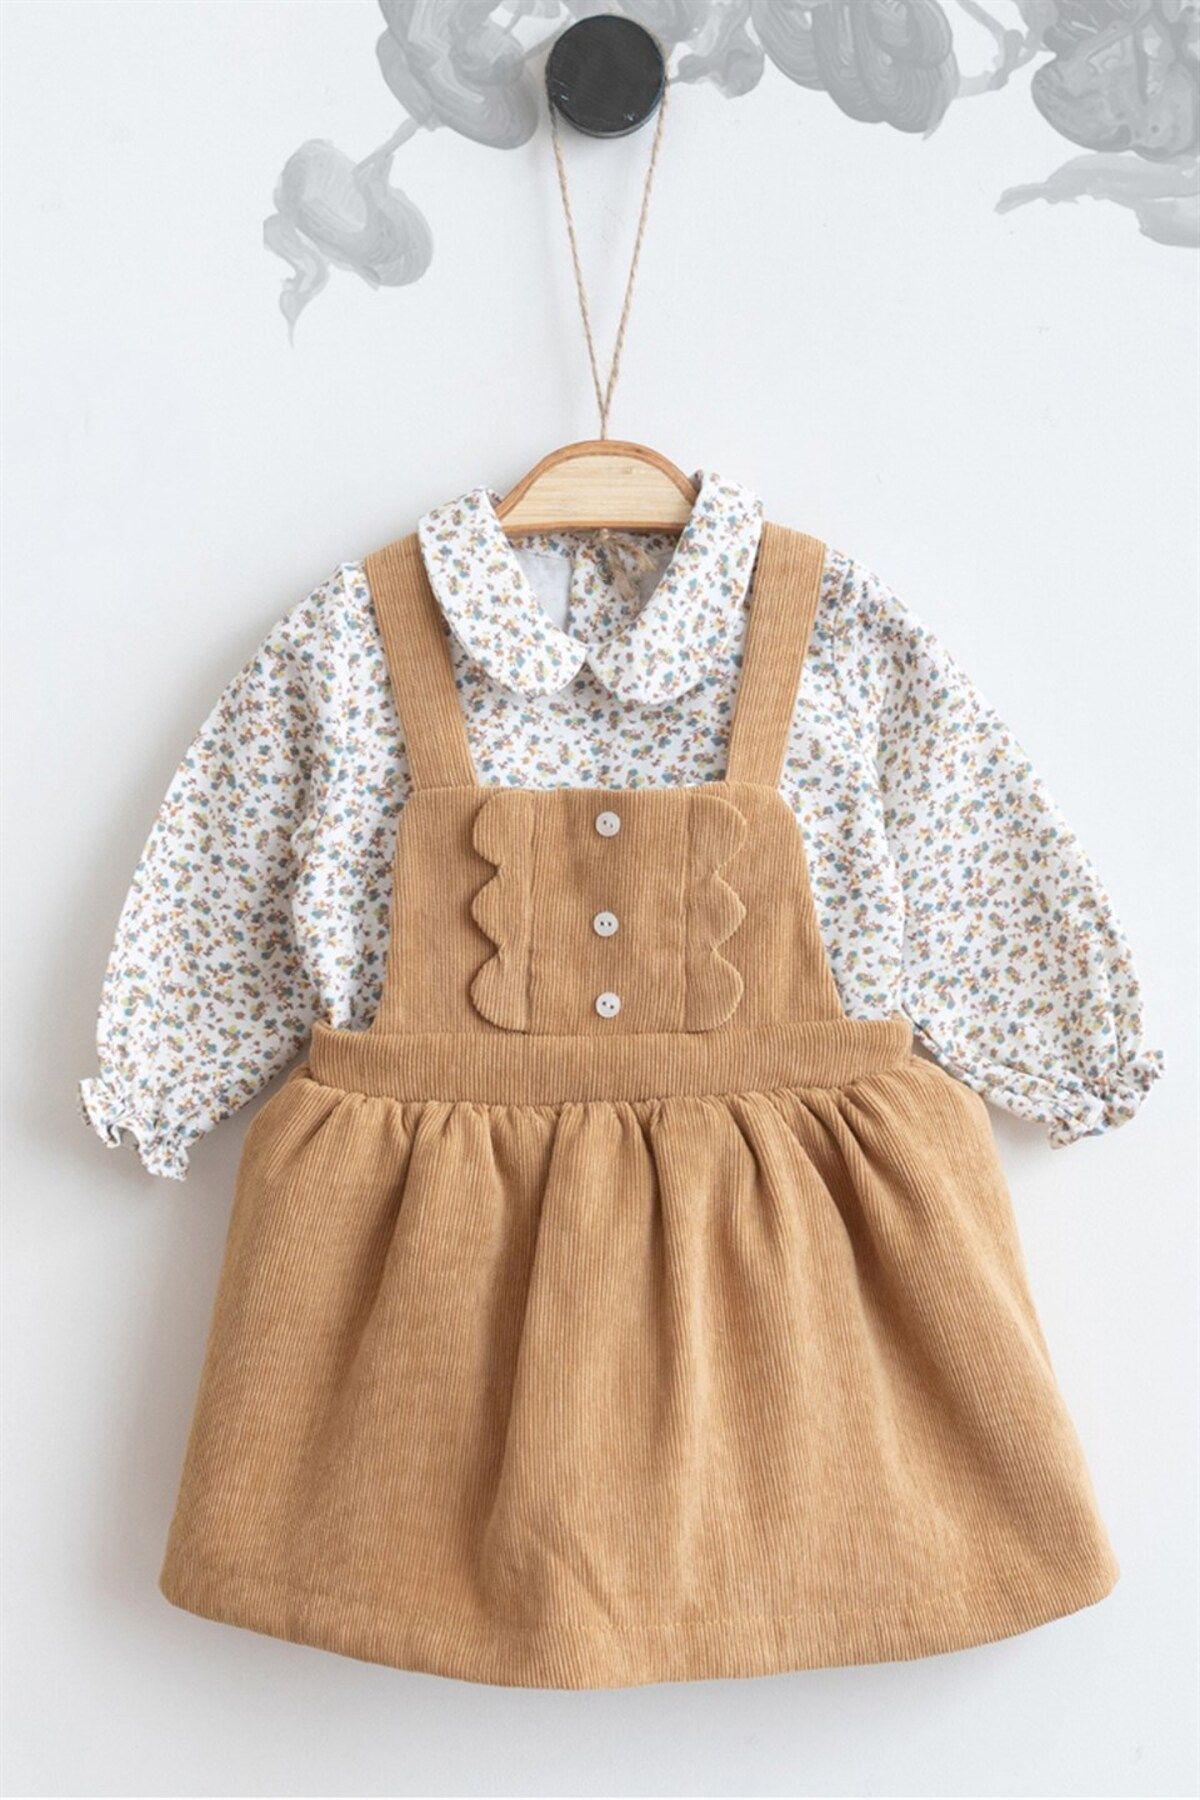 cantoy Kız Bebek Çiçekli Gömlekli Salopet Elbise